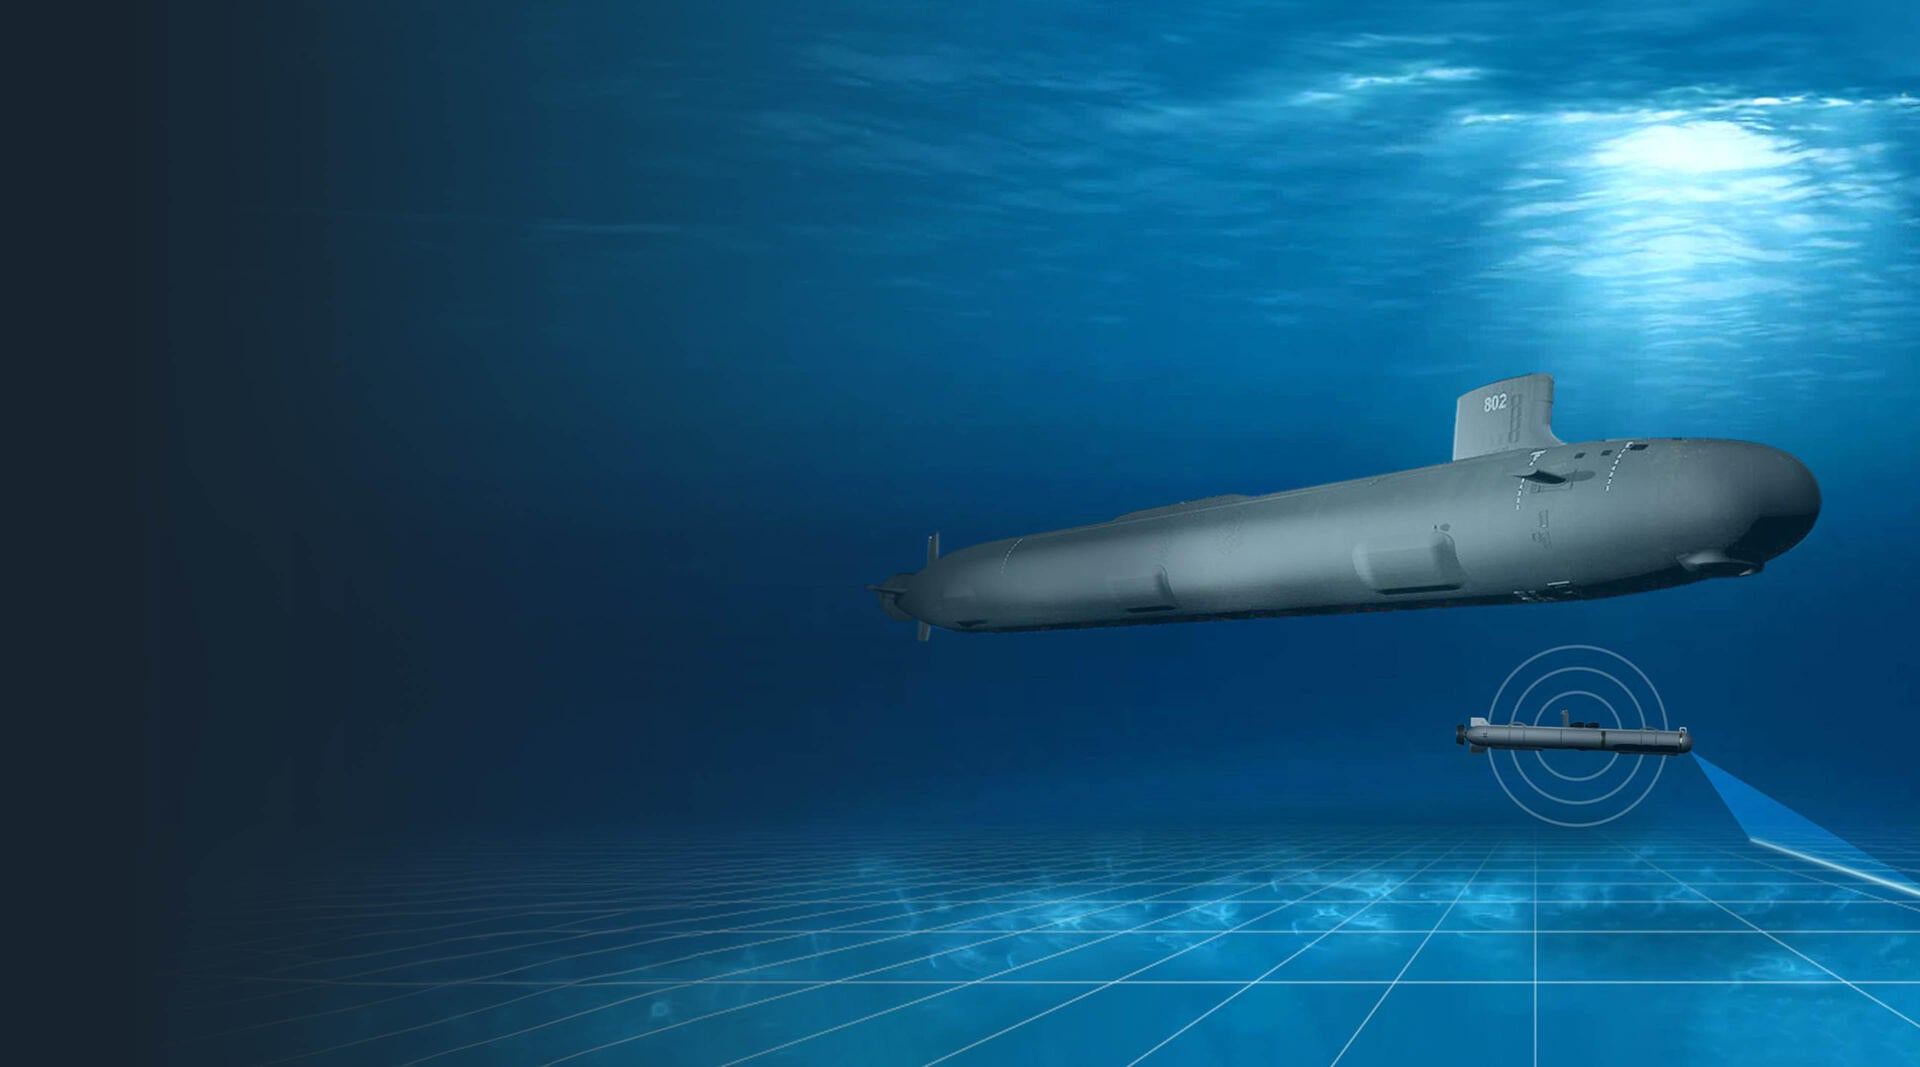 A submarine glides underneath a surface